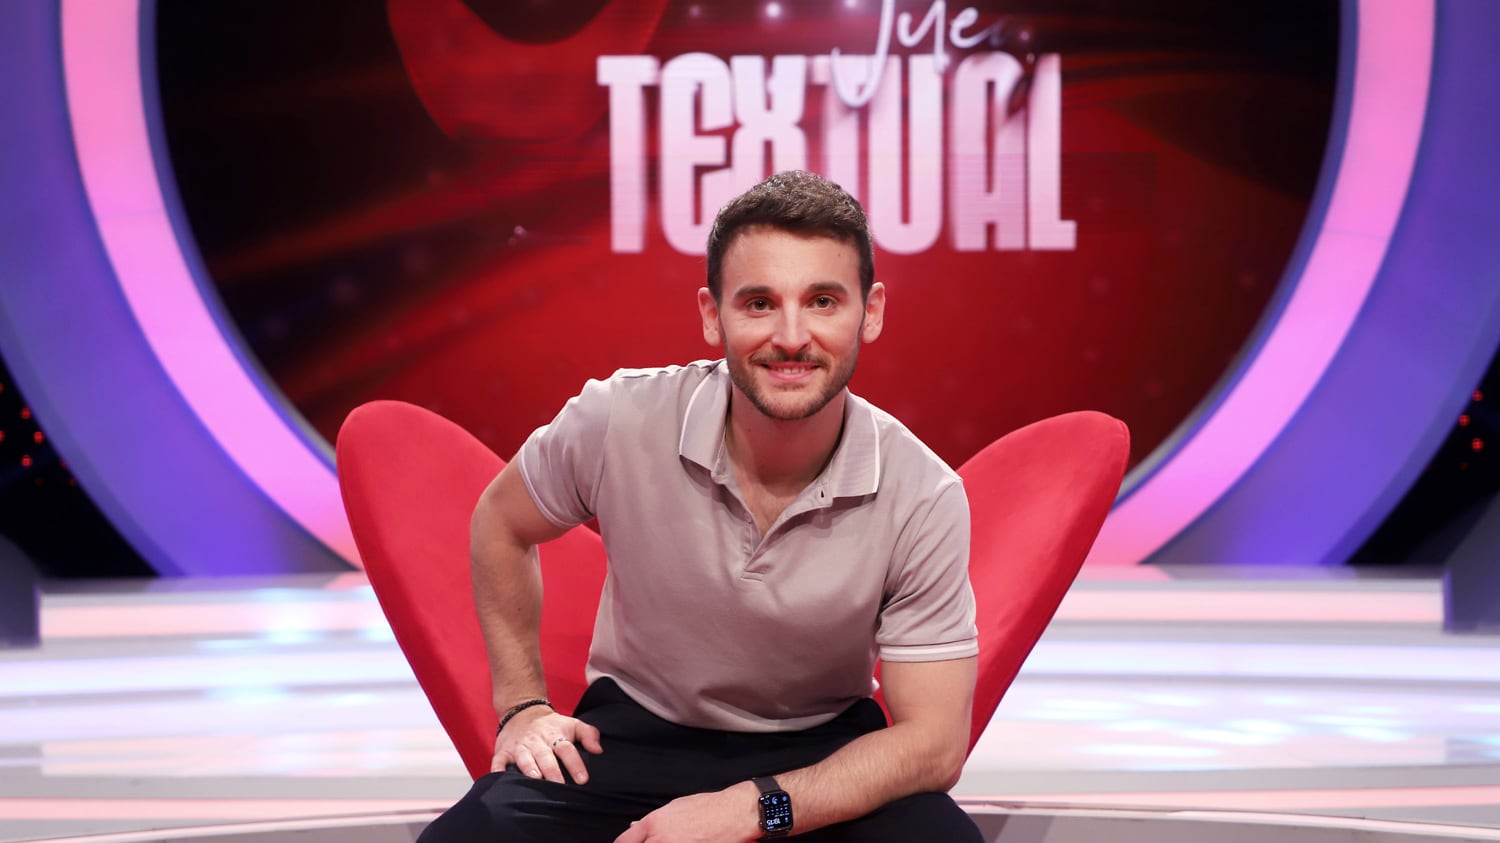 Tomás González en "Juego Textual"  | Canal 13